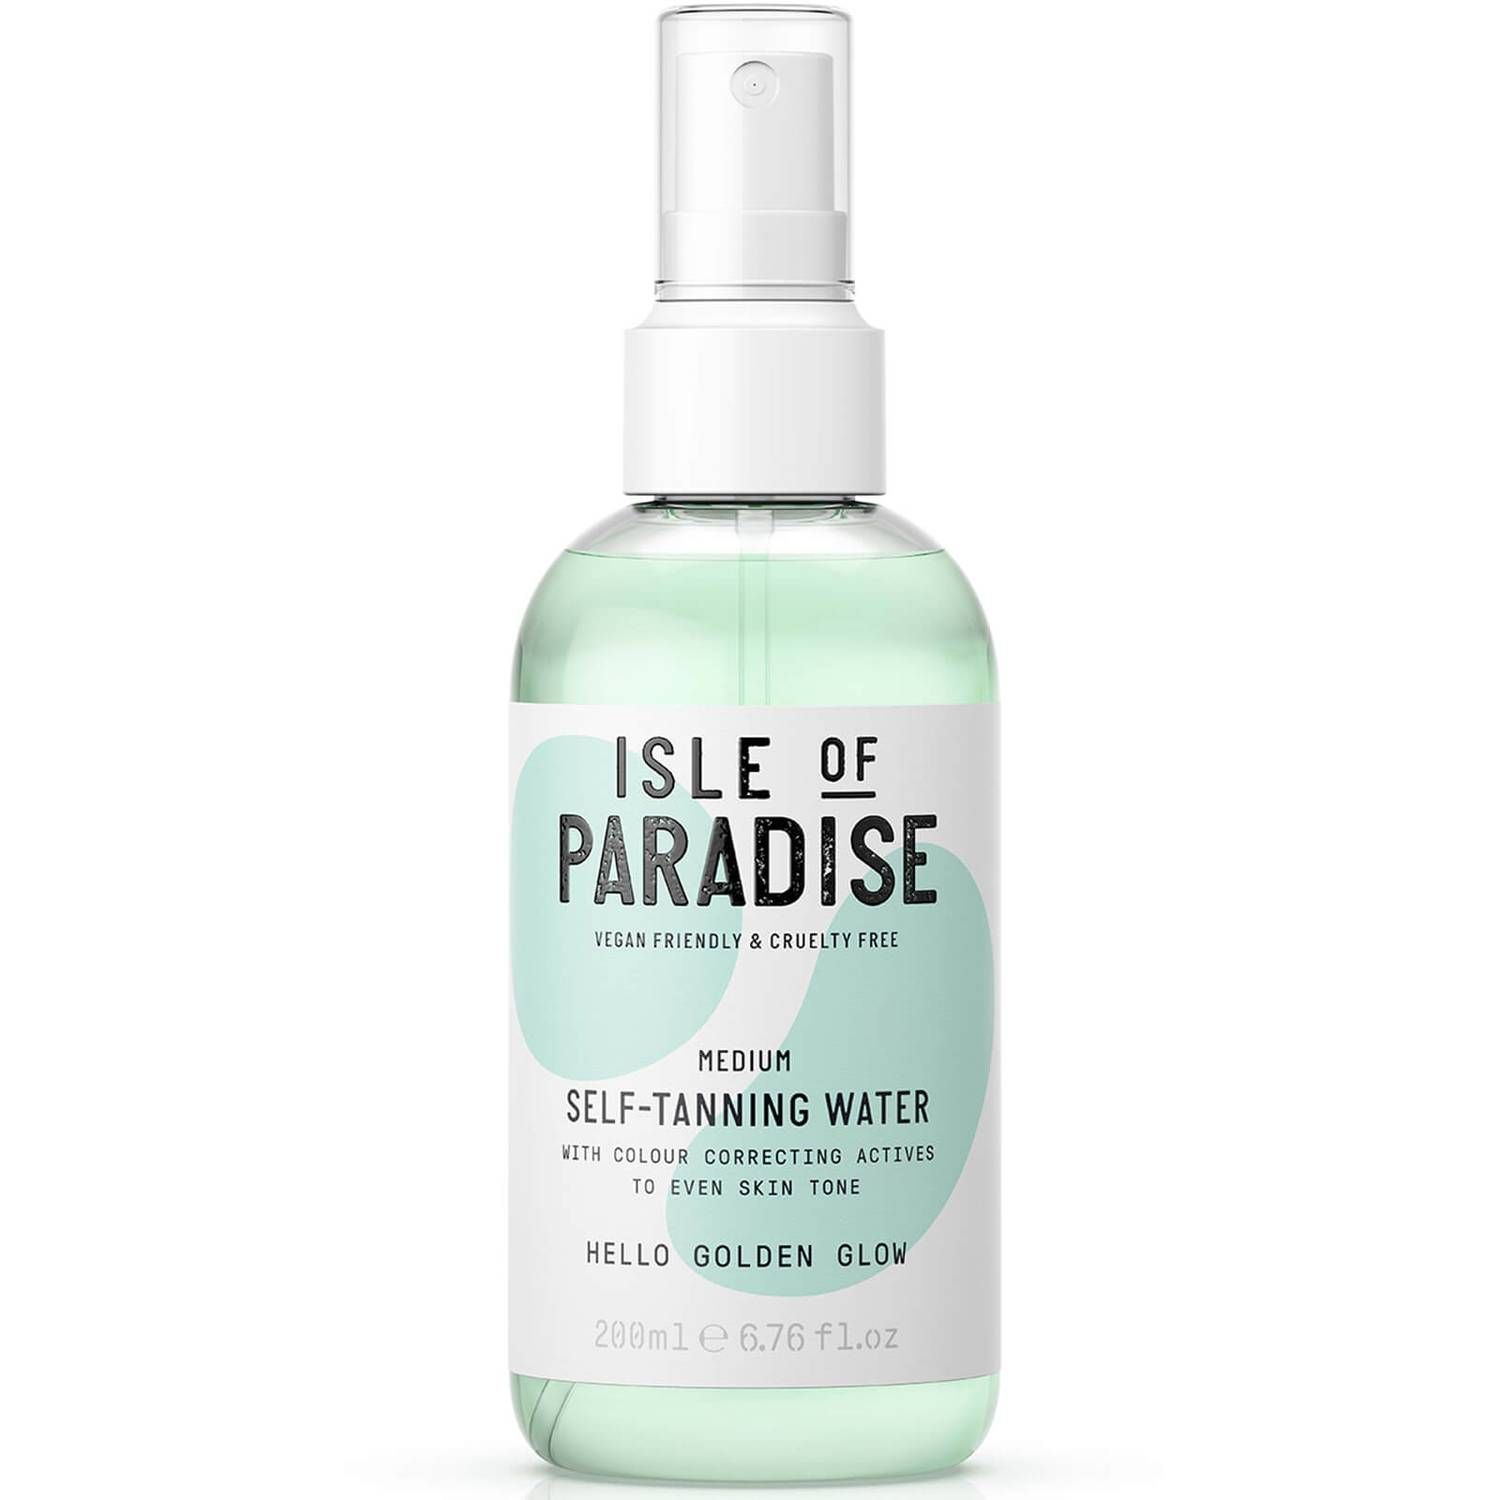 Isle of Paradise Self-Tanning Water - Medium 200ml | Cult Beauty